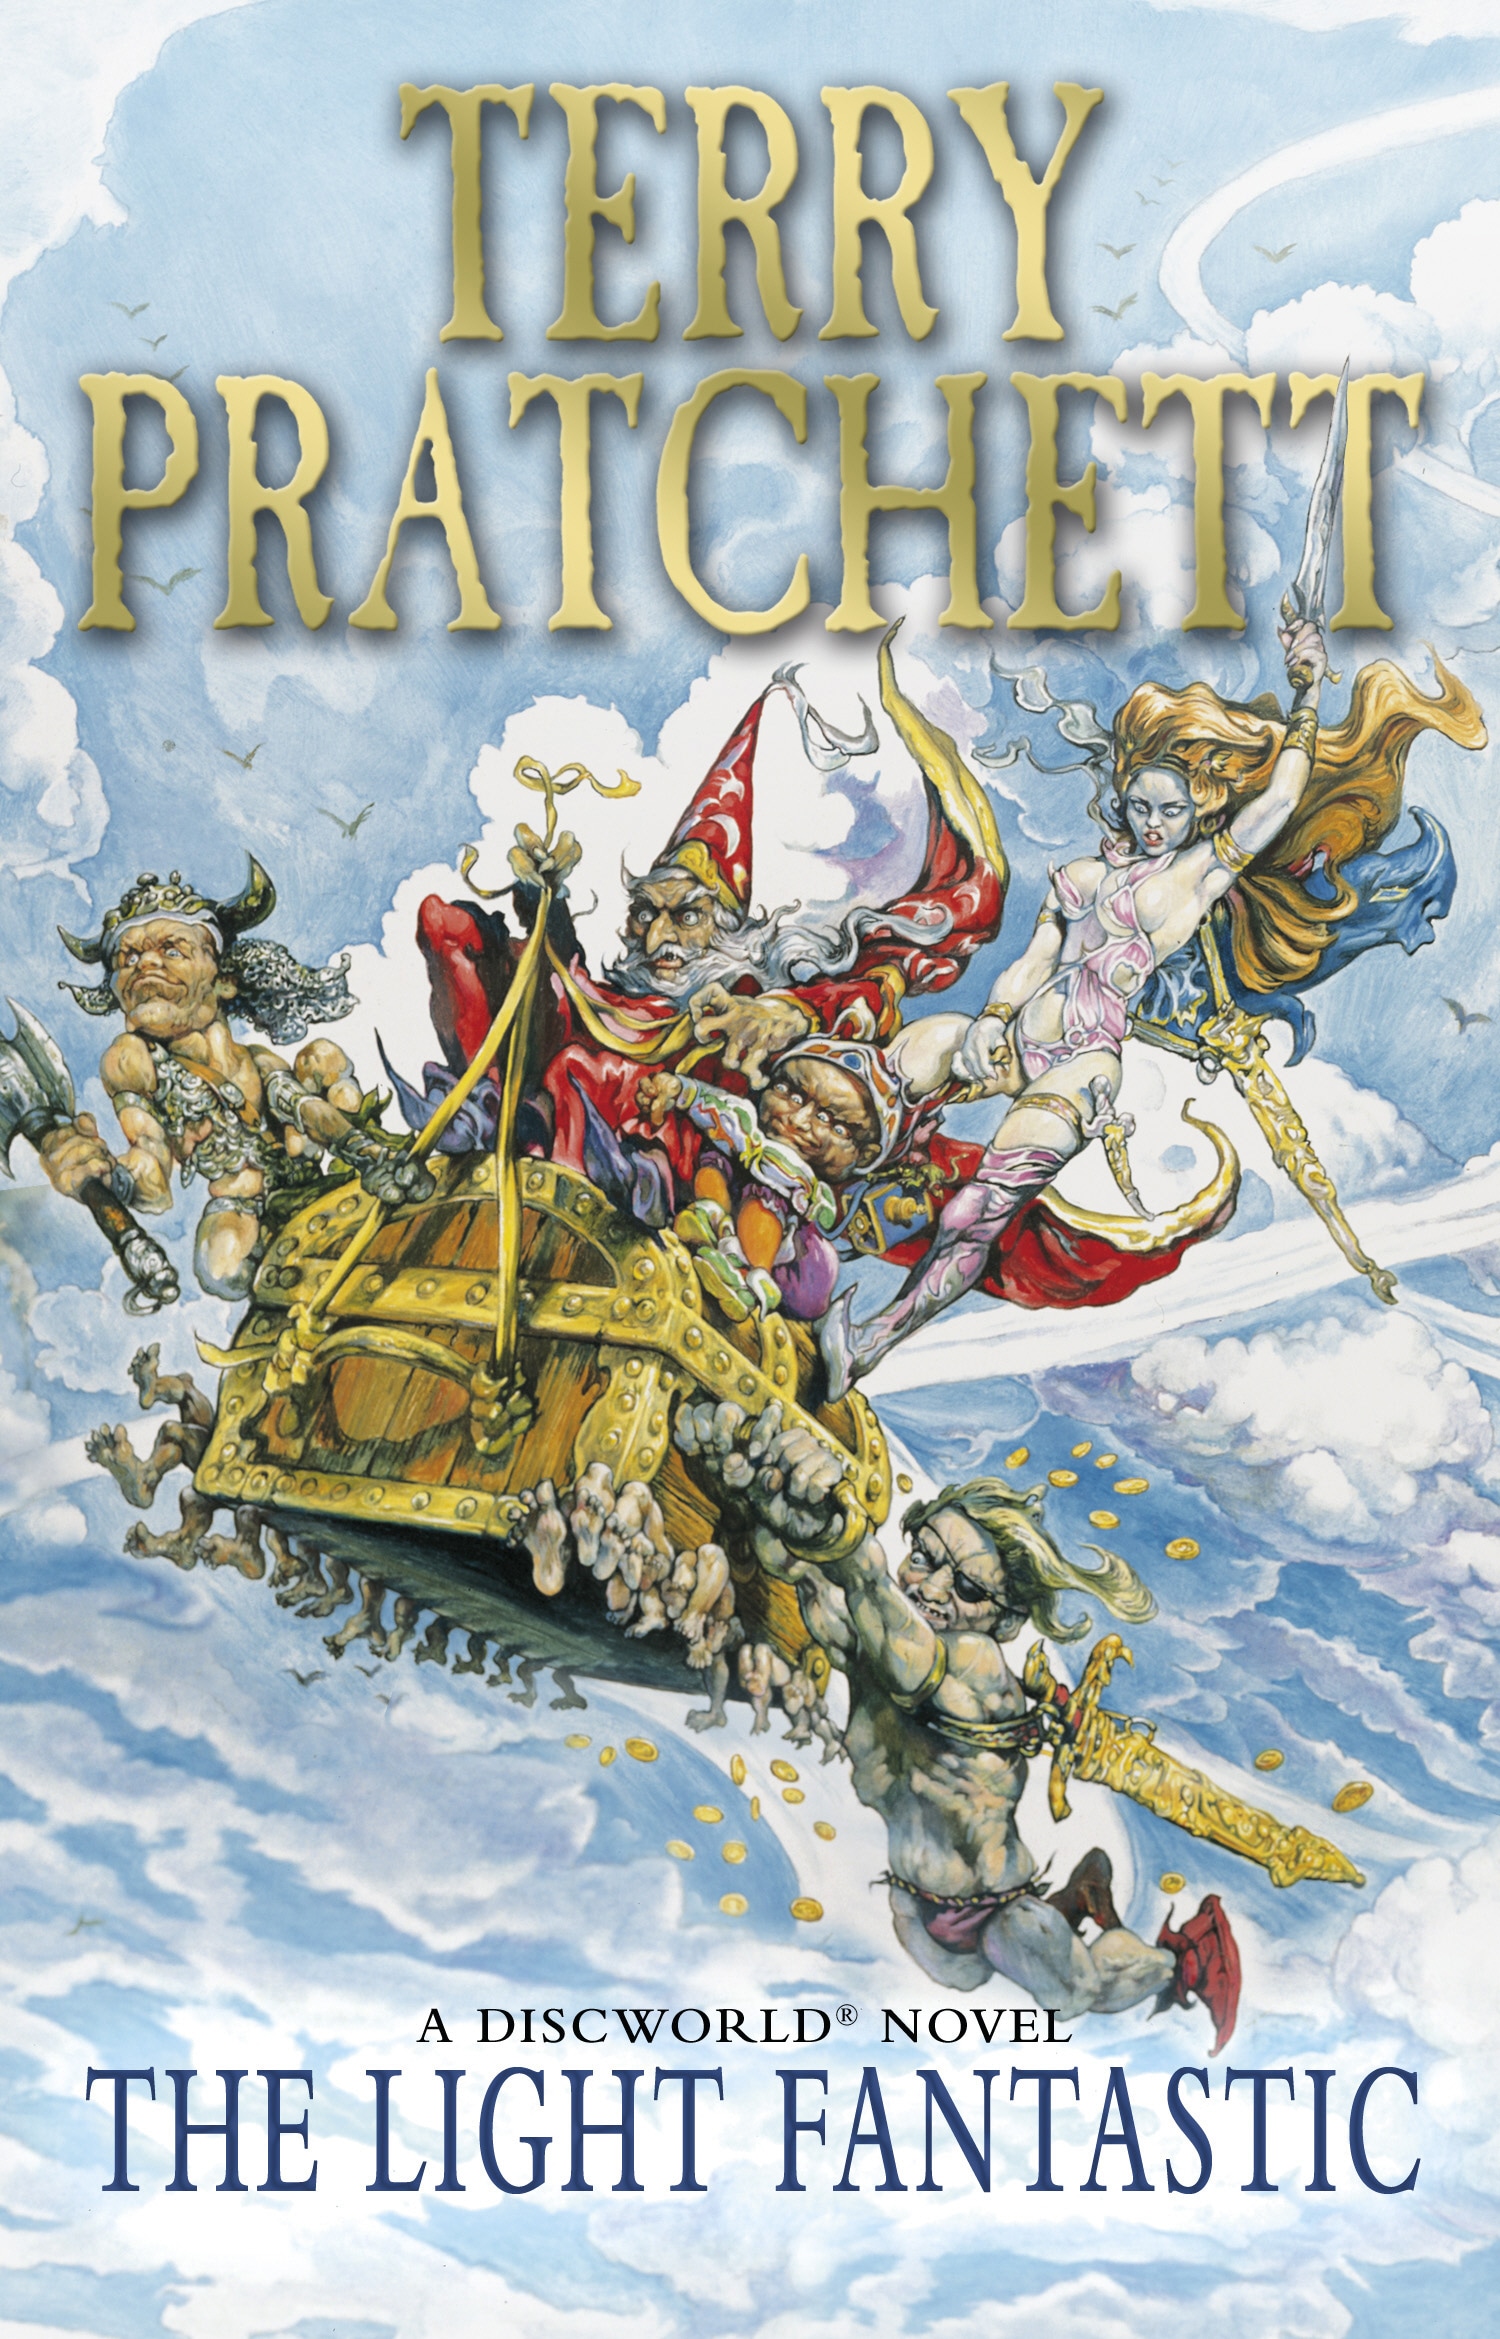 Book “The Light Fantastic” by Terry Pratchett — June 21, 2012